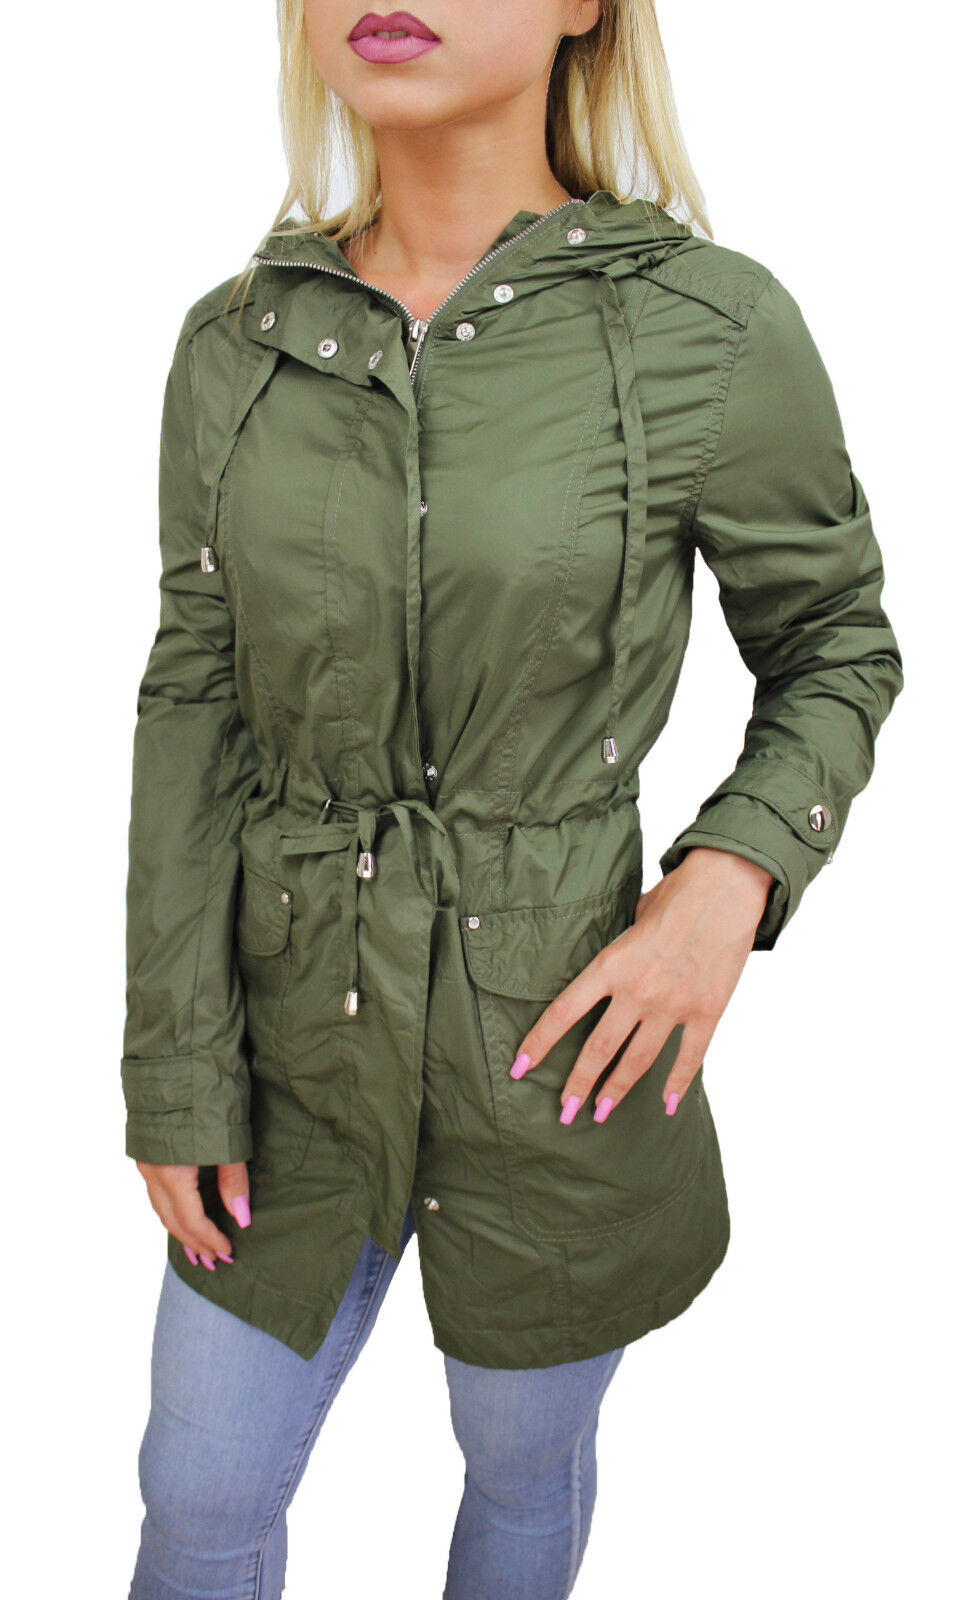 Diamond giacca giubbotto donna verde casual impermeabile trench parka da S a XXL